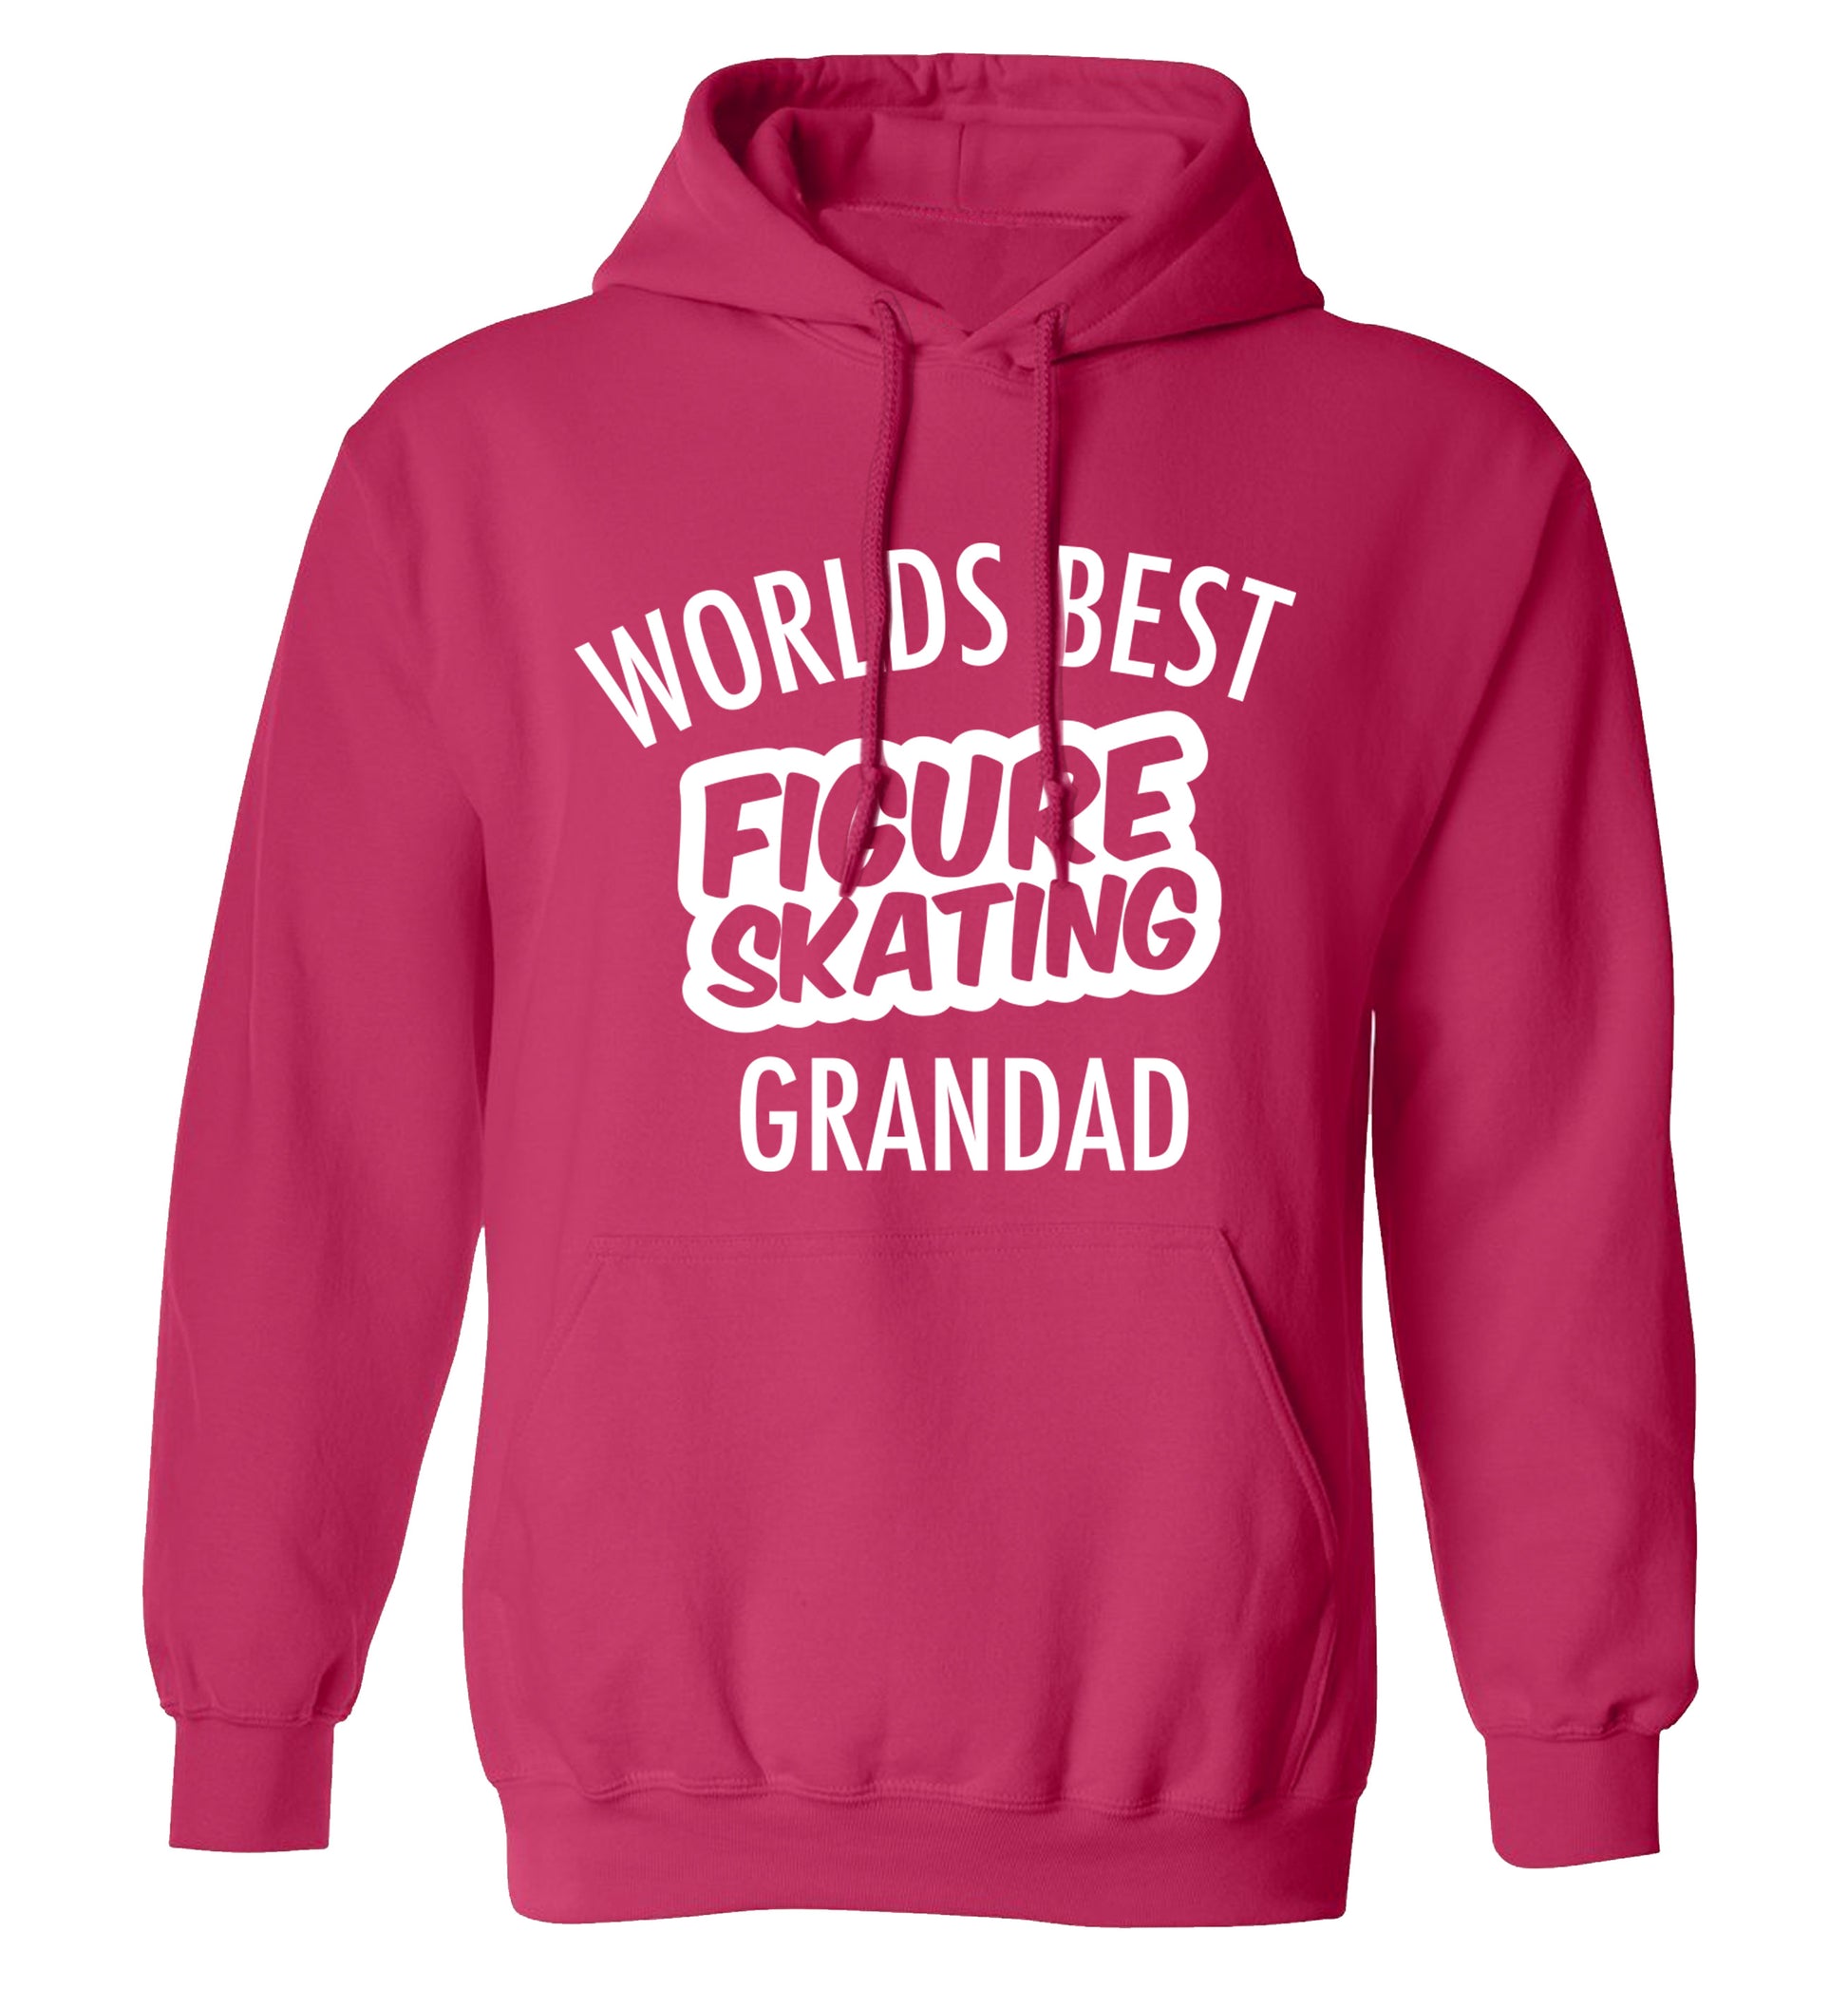 Worlds best figure skating grandad adults unisexpink hoodie 2XL